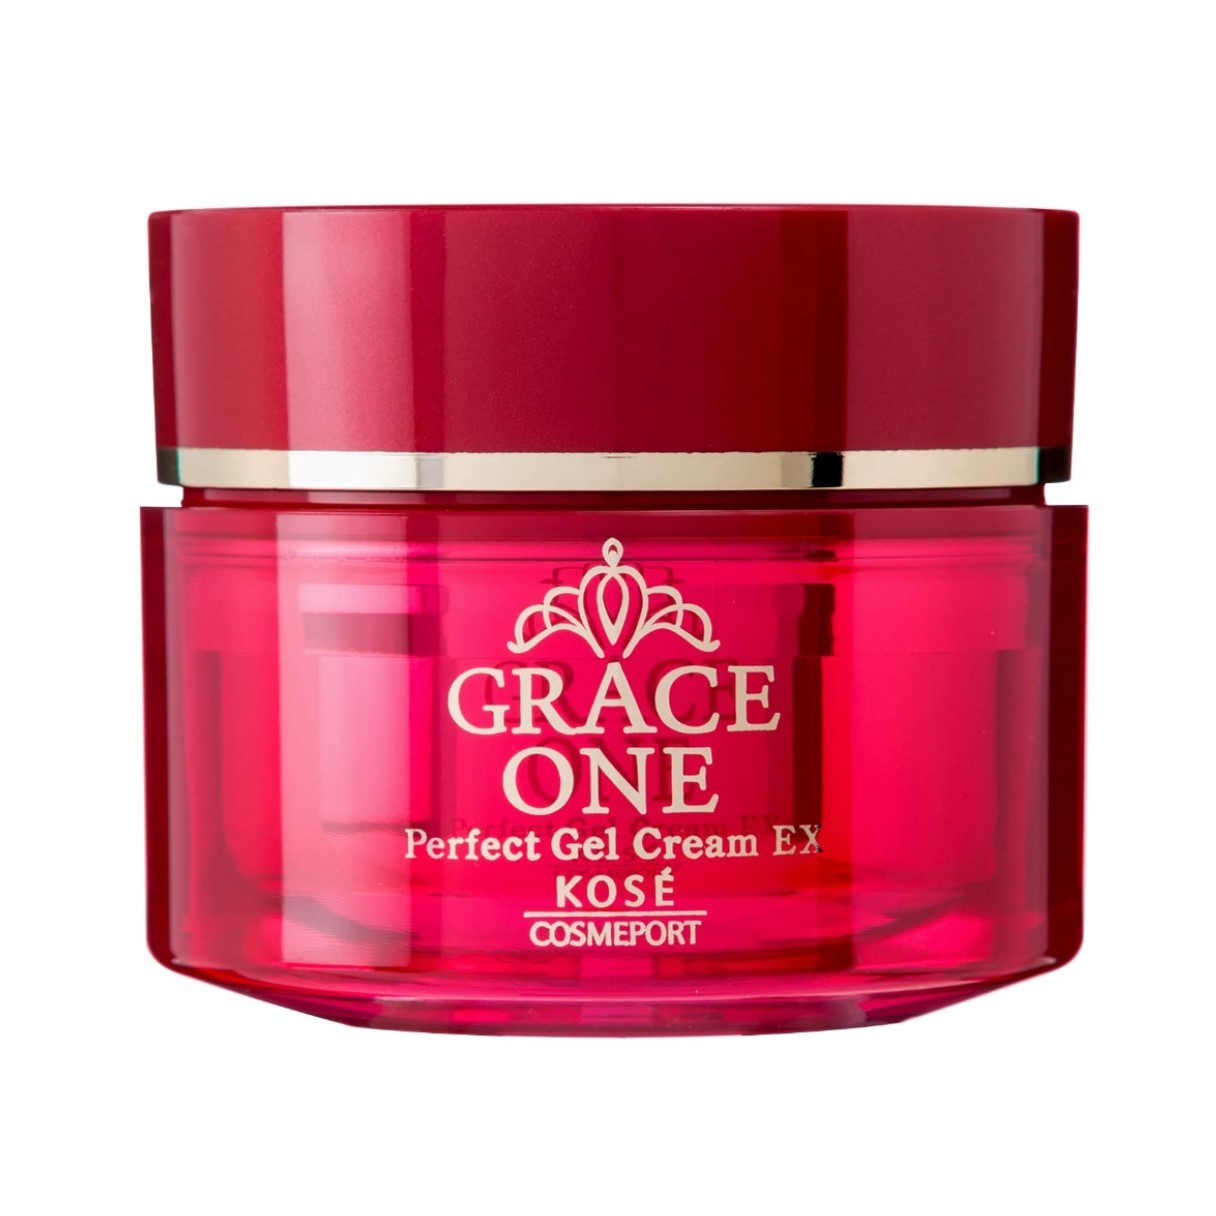 Kose - Grace One - Perfect Gel Cream EX - 100g